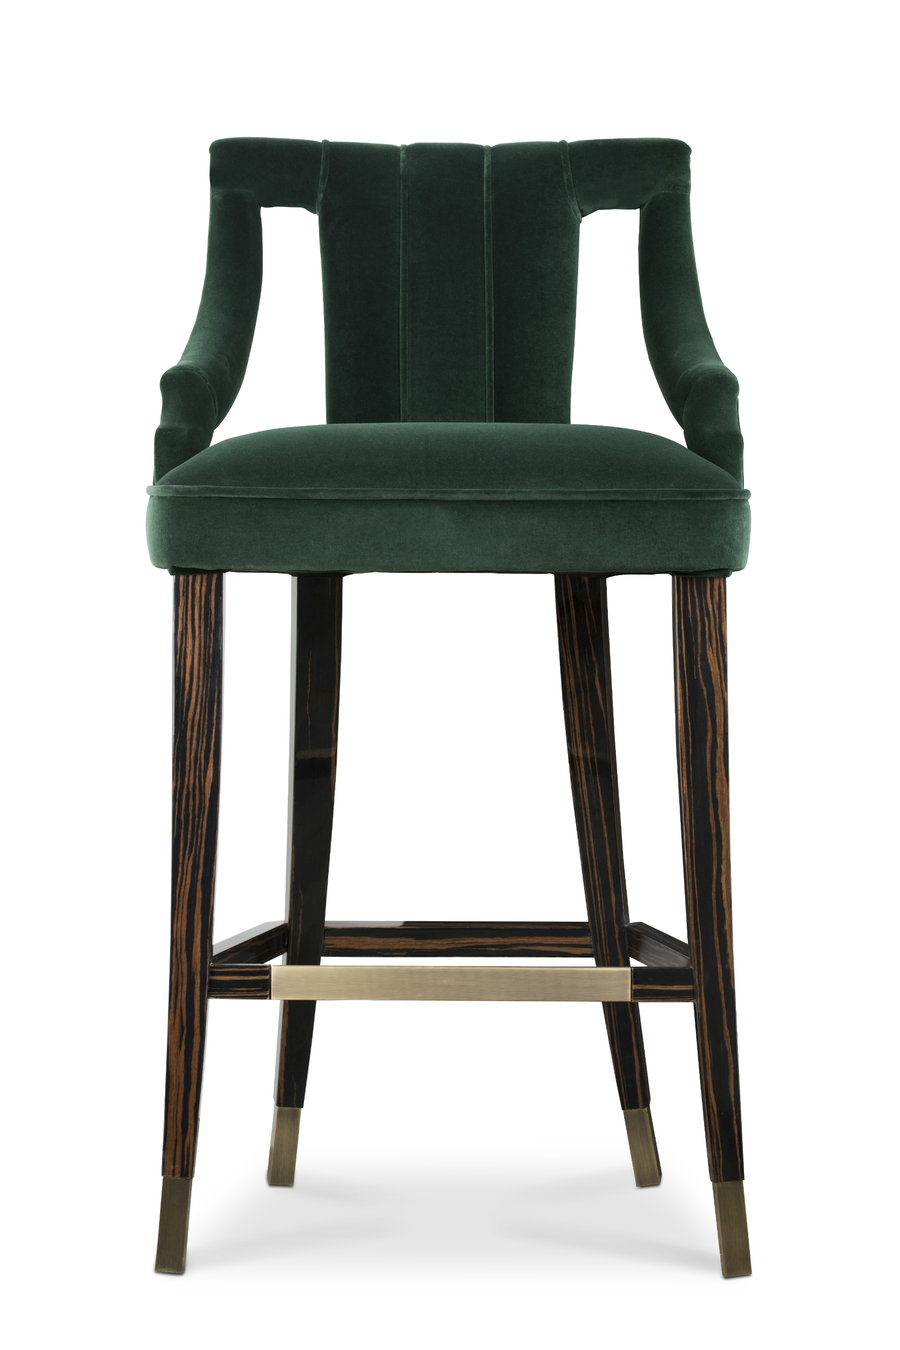 modern bar chair design